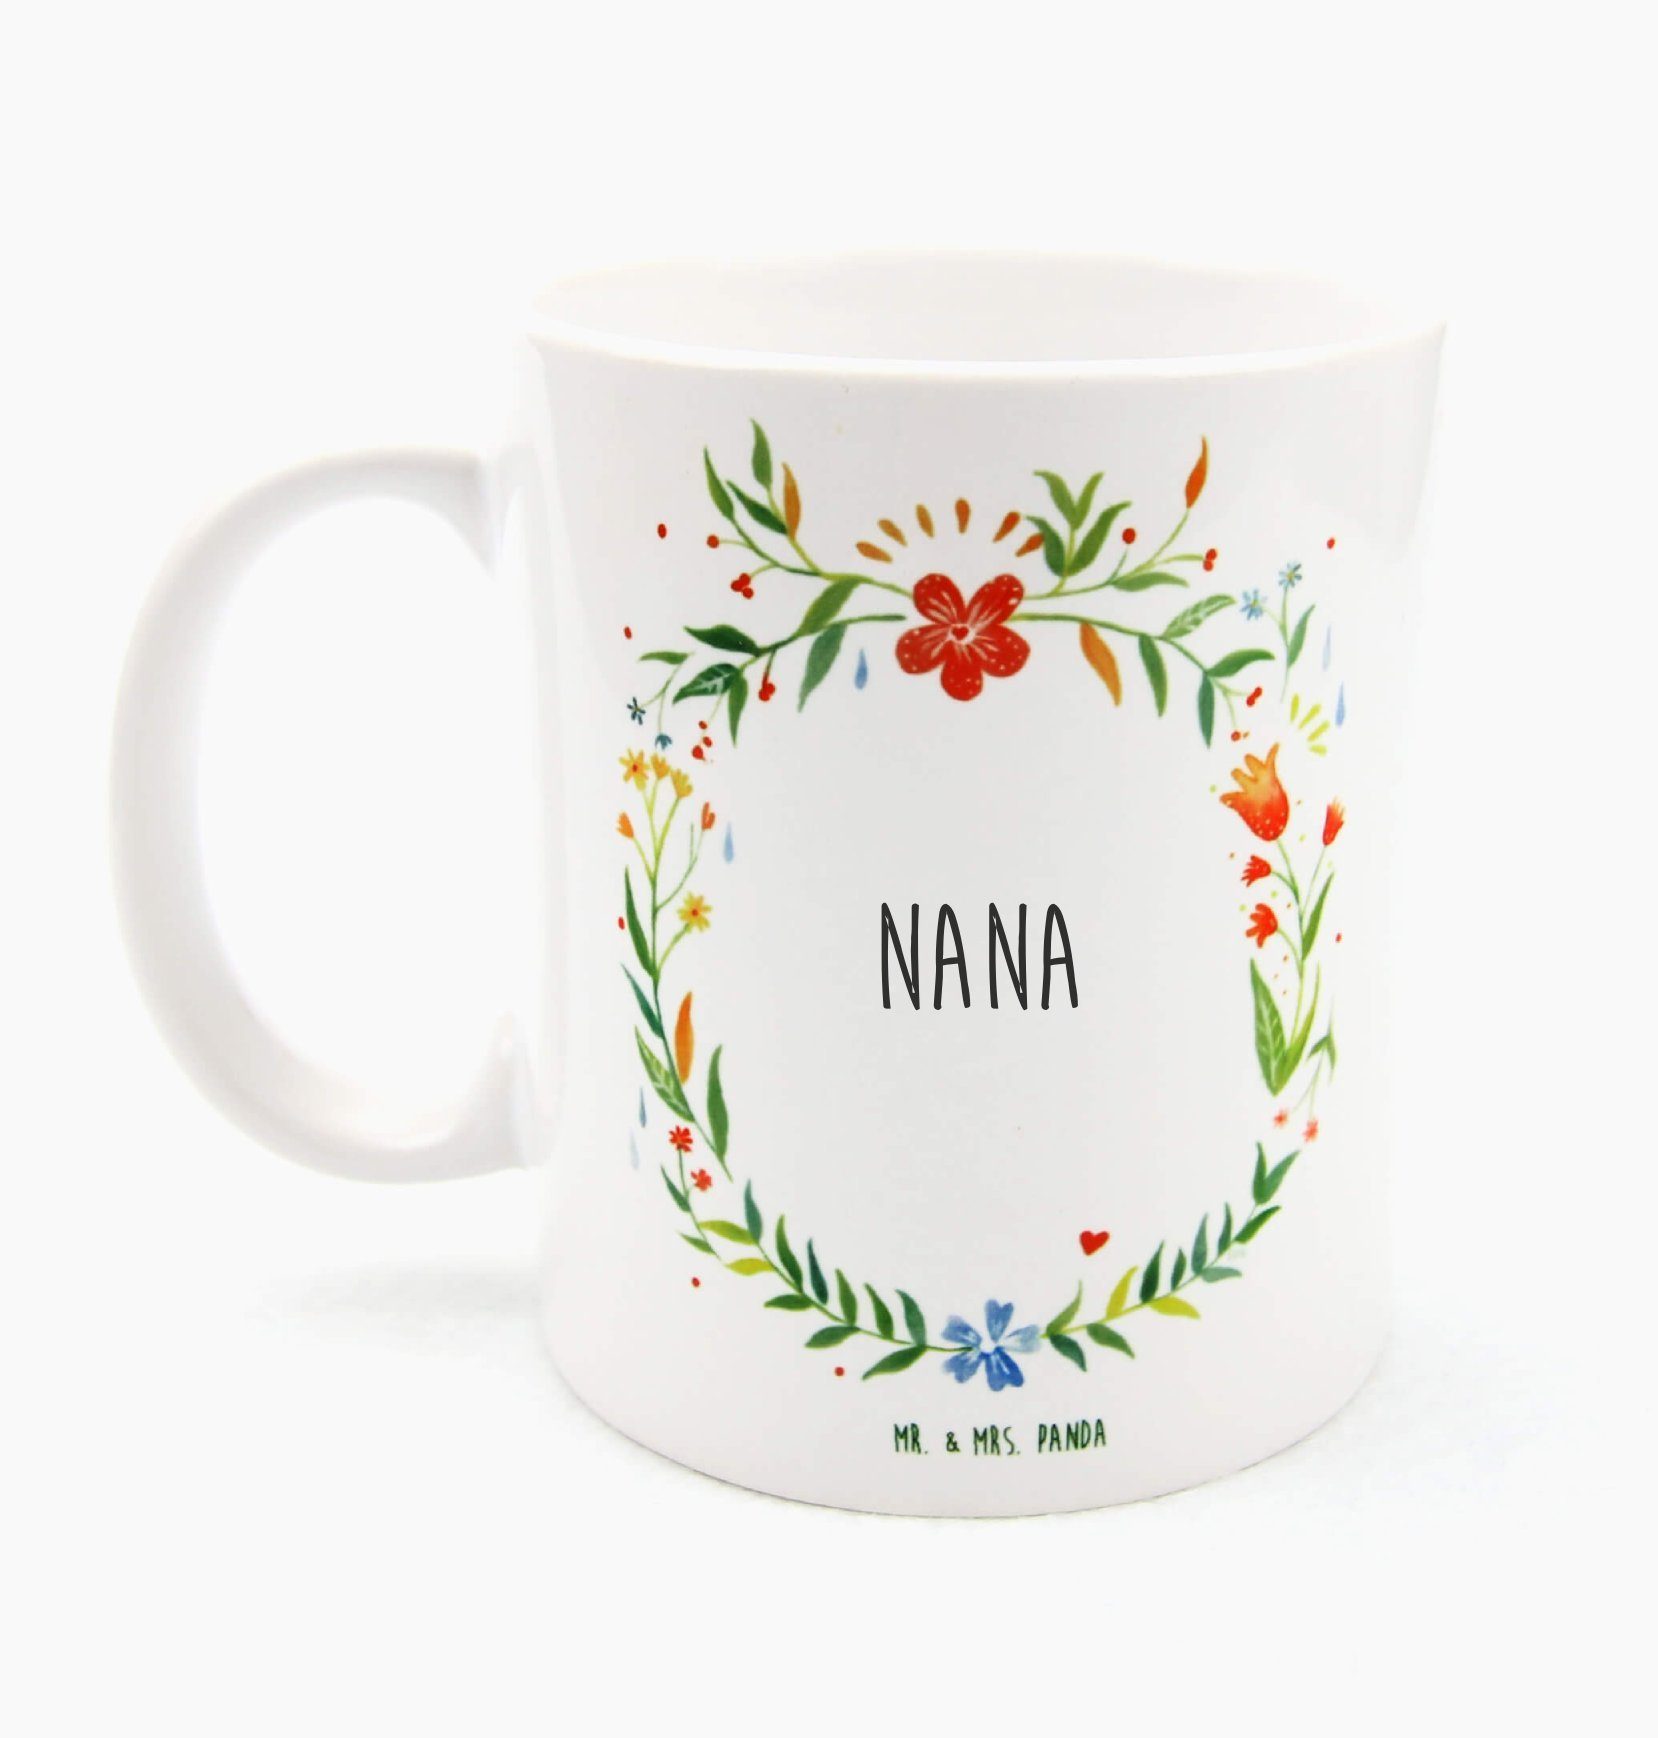 Mr. & Mrs. Panda Tasse Nana - Geschenk, Teebecher, Becher, Kaffeetasse, Büro Tasse, Tasse Mo, Keramik